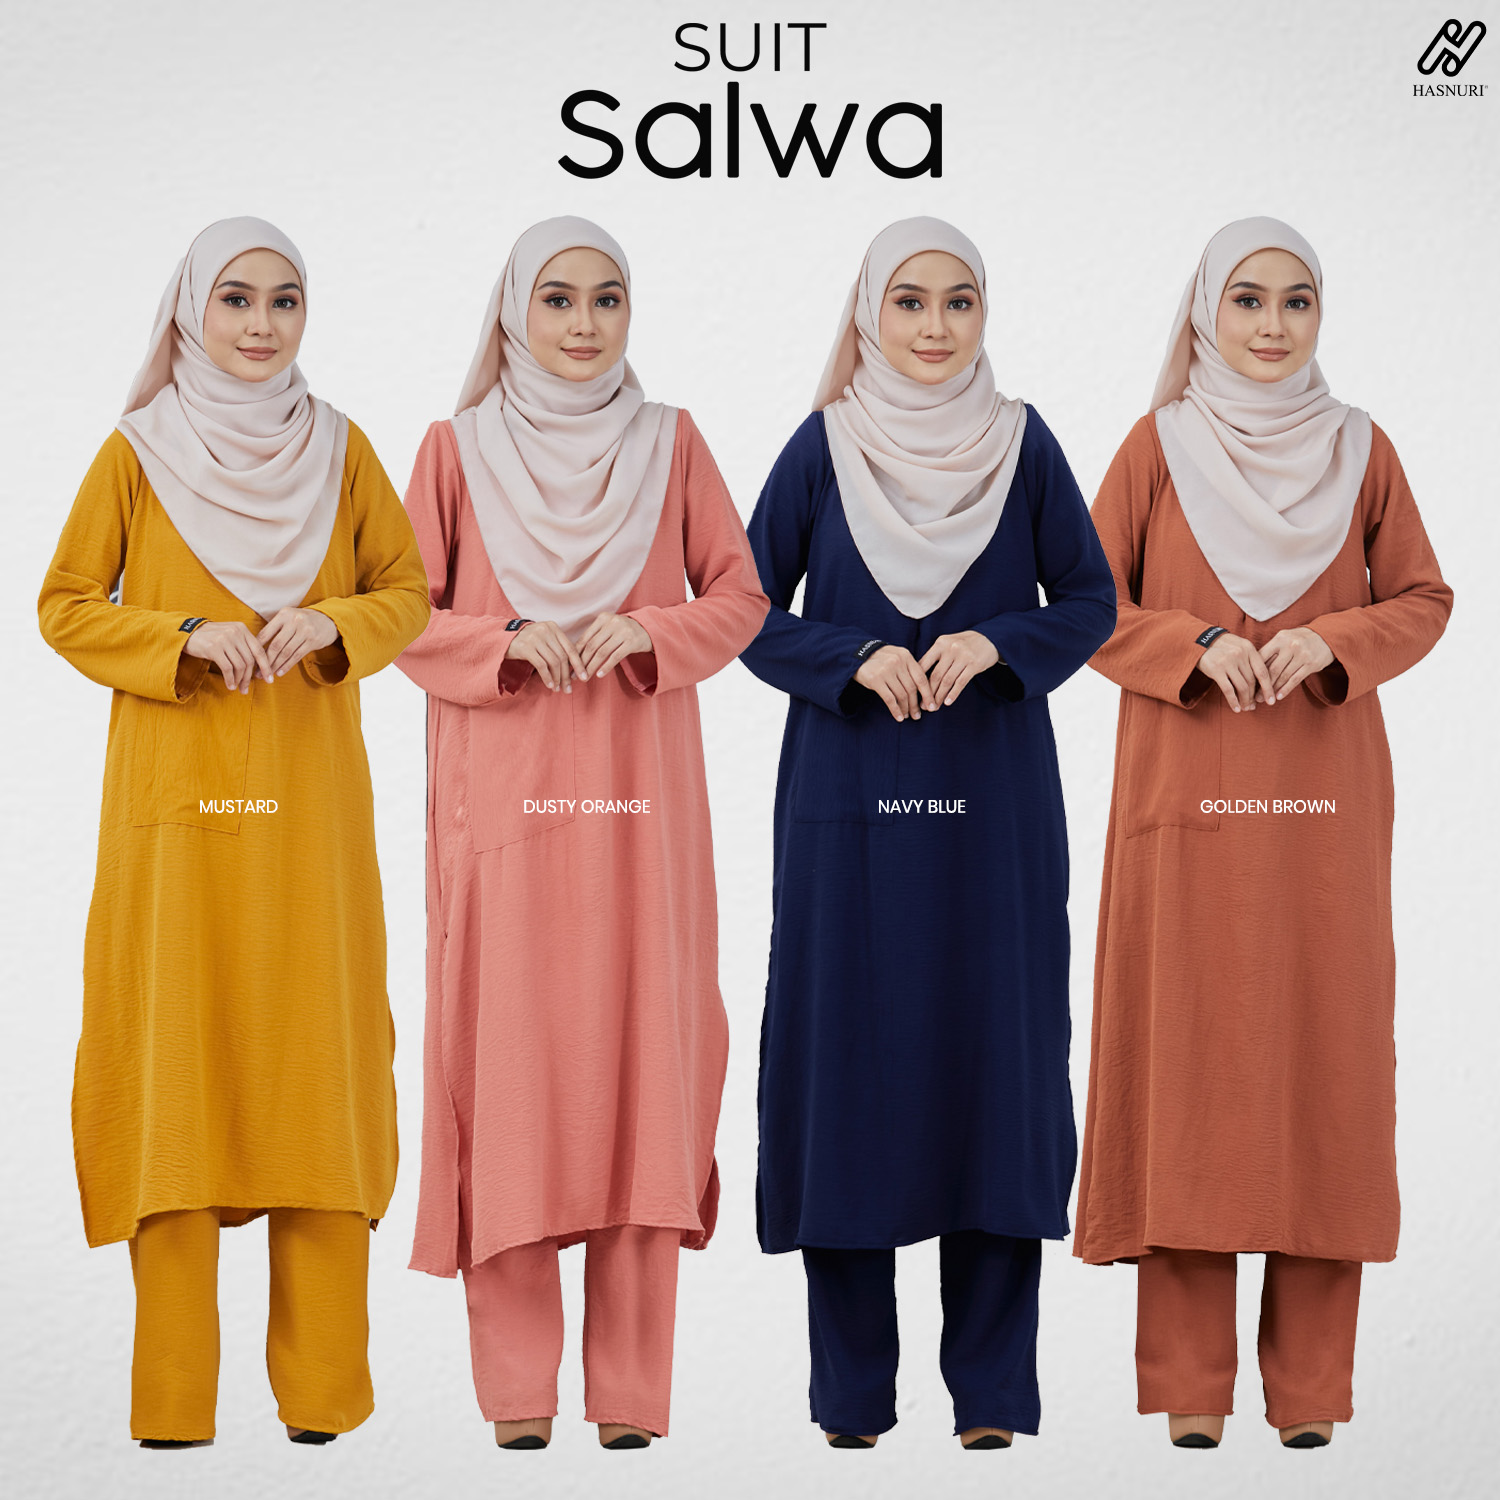 Suit Salwa - Navy Blue